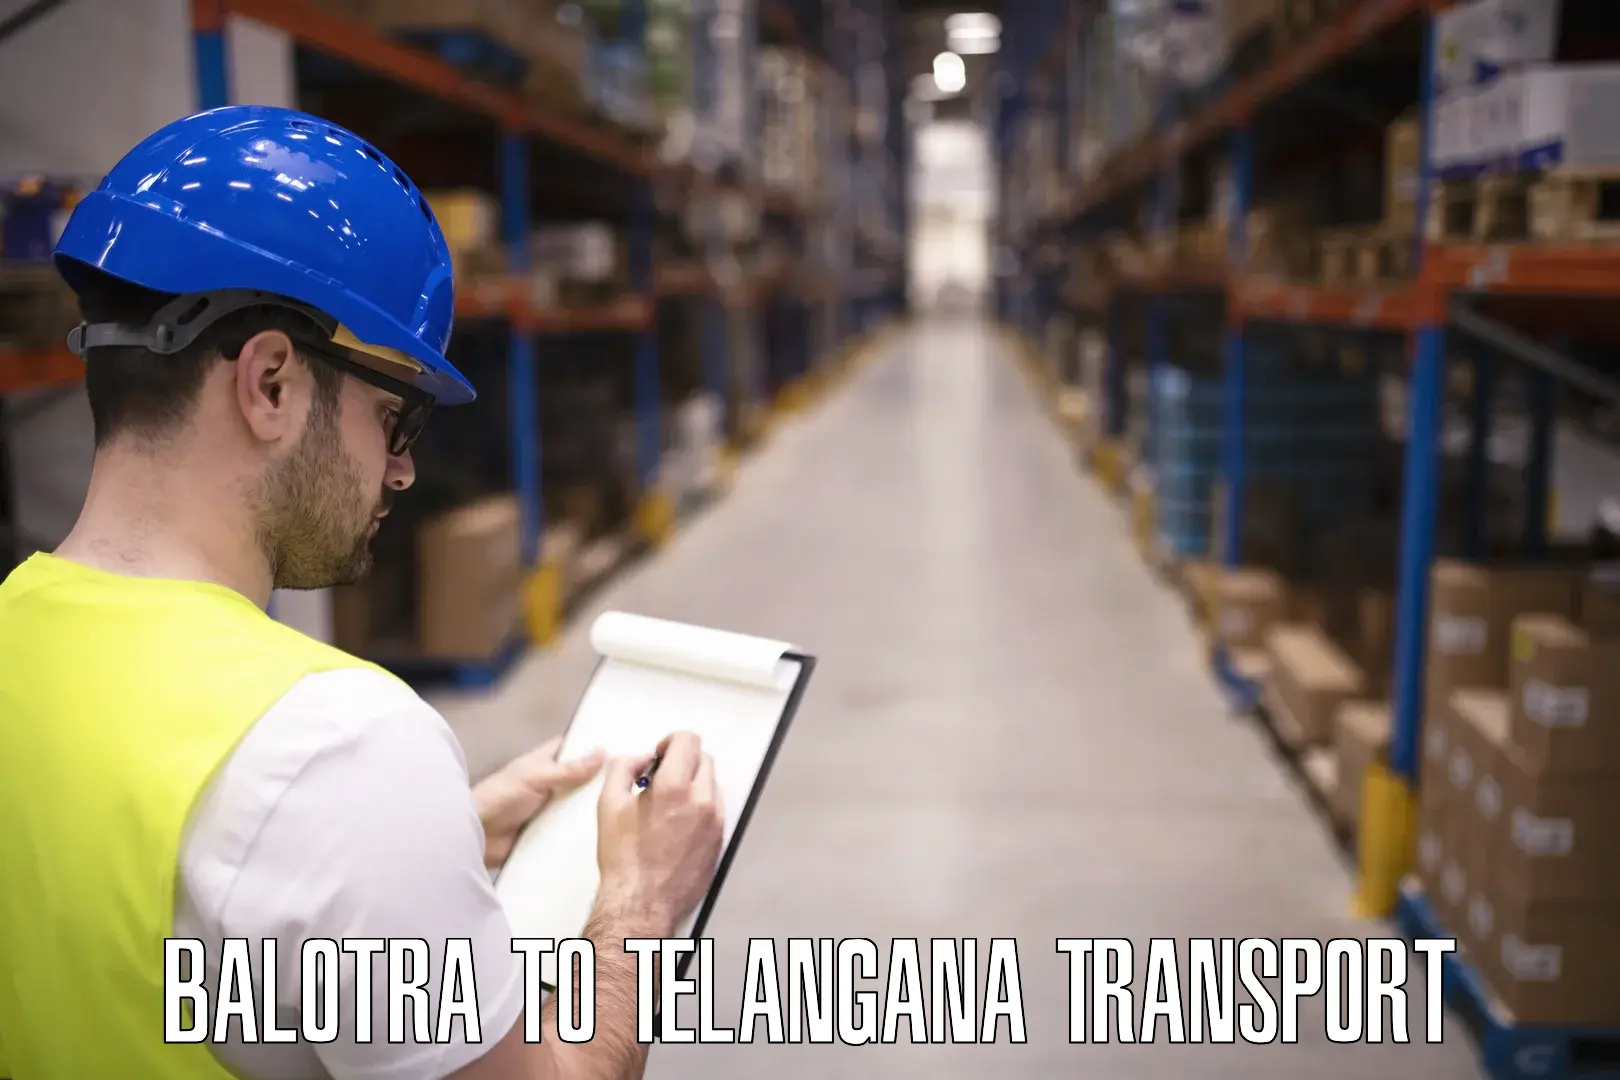 Lorry transport service Balotra to Tallada